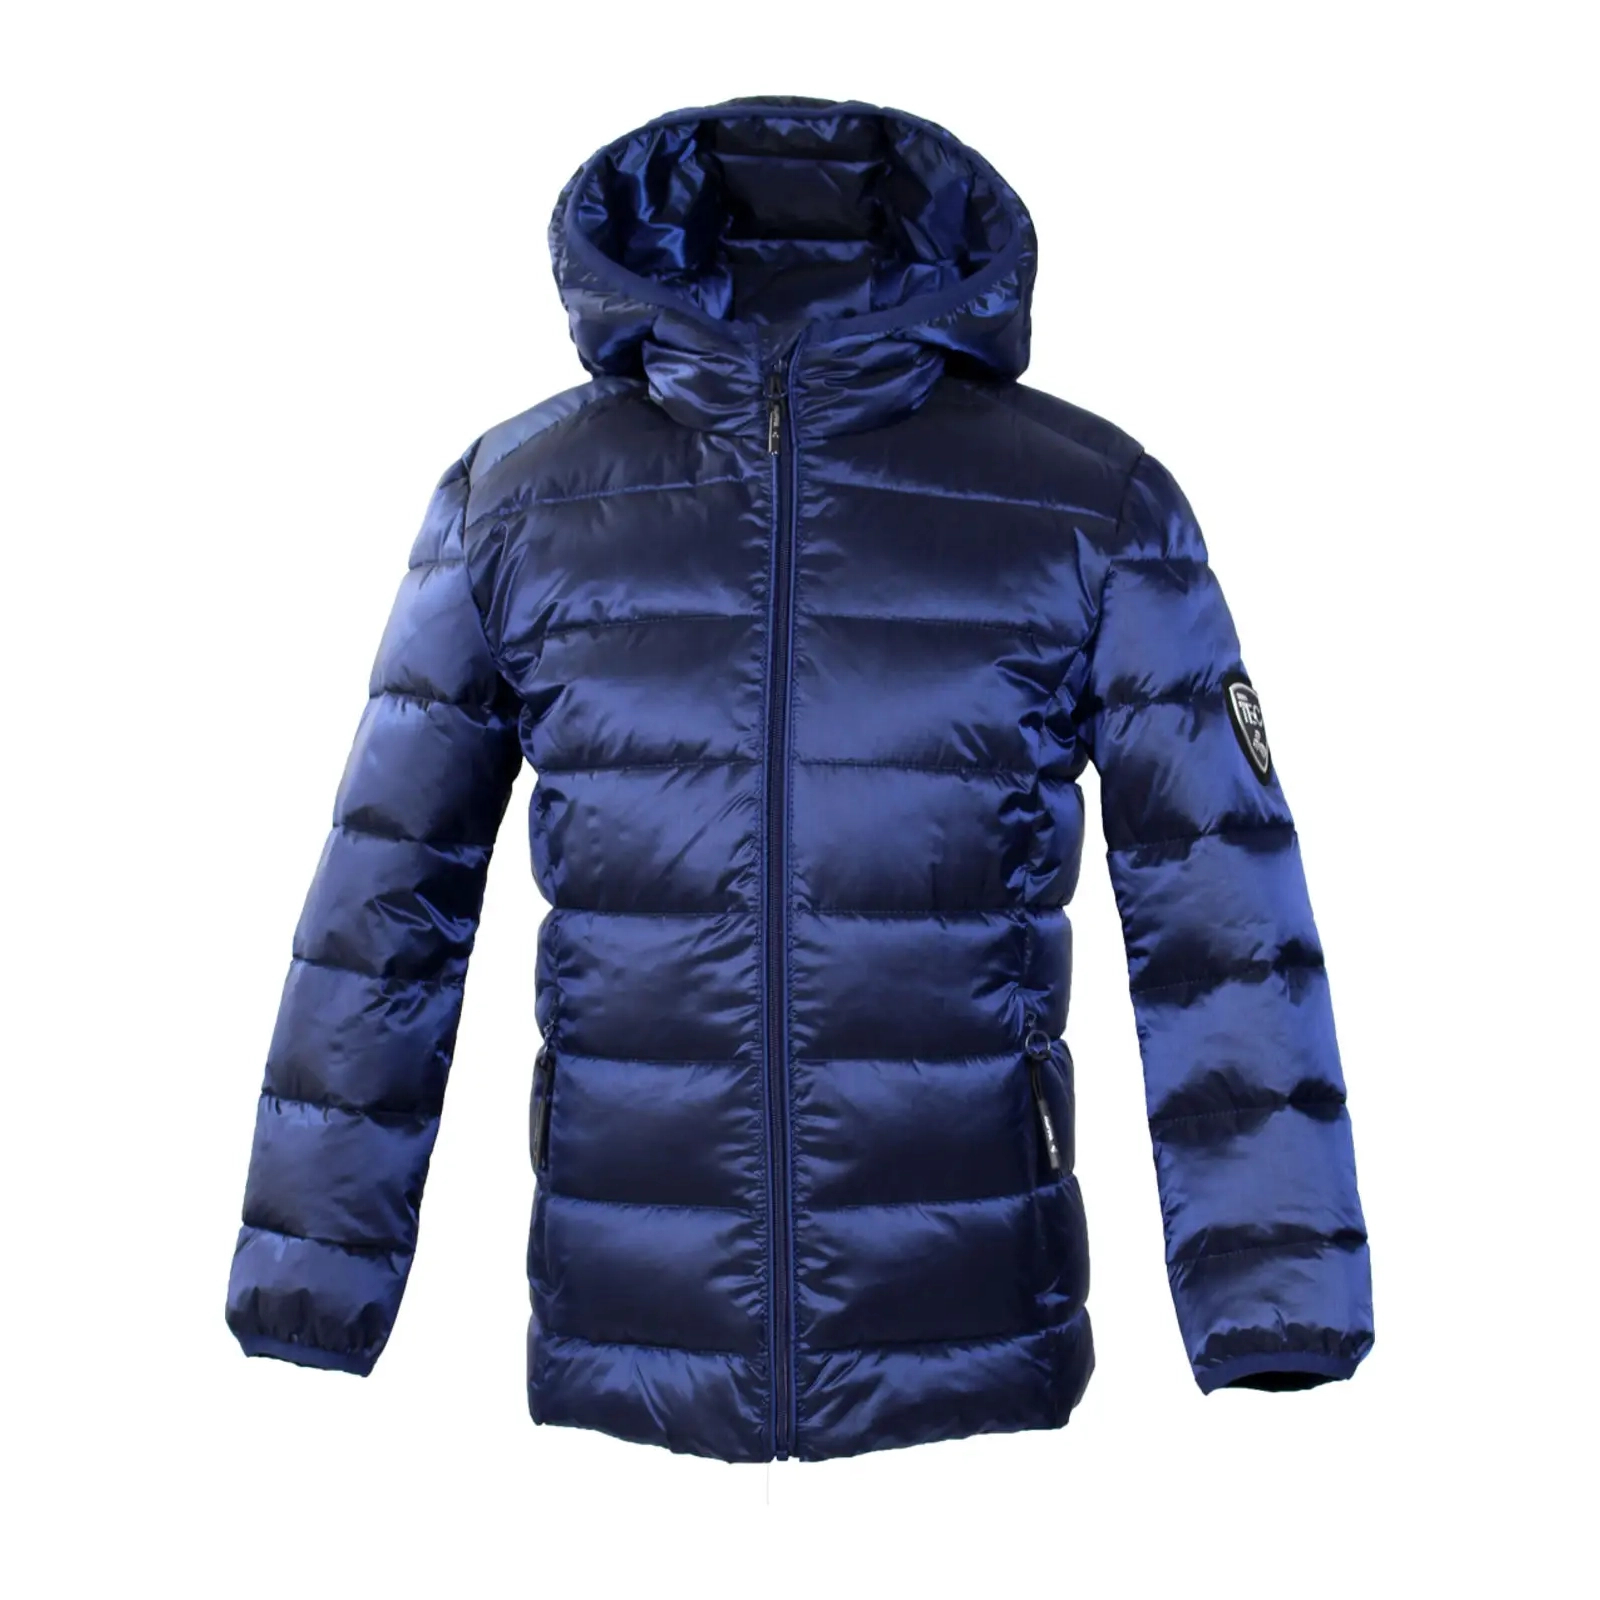 Куртка Huppa STEVO 2 17990227 синий 128 (4741468885001)